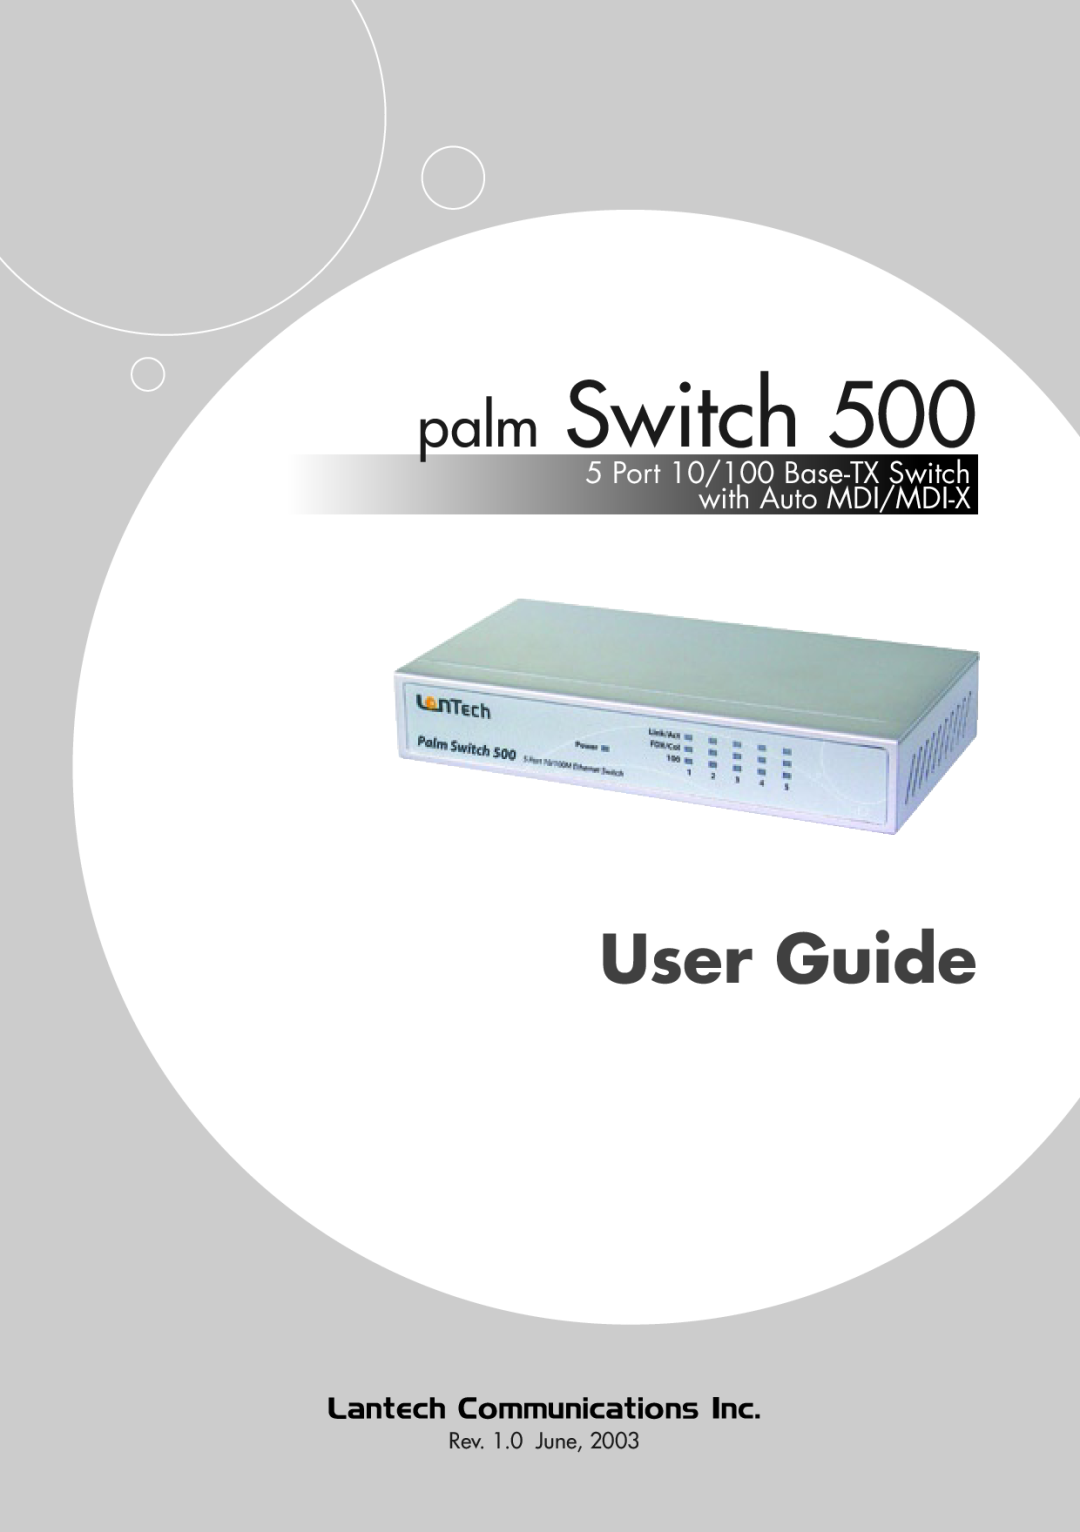 Palm 500 manual palm Switch, User Guide, Port 10/100 Base-TX Switch with Auto MDI/MDI-X, Rev. 1.0 June 